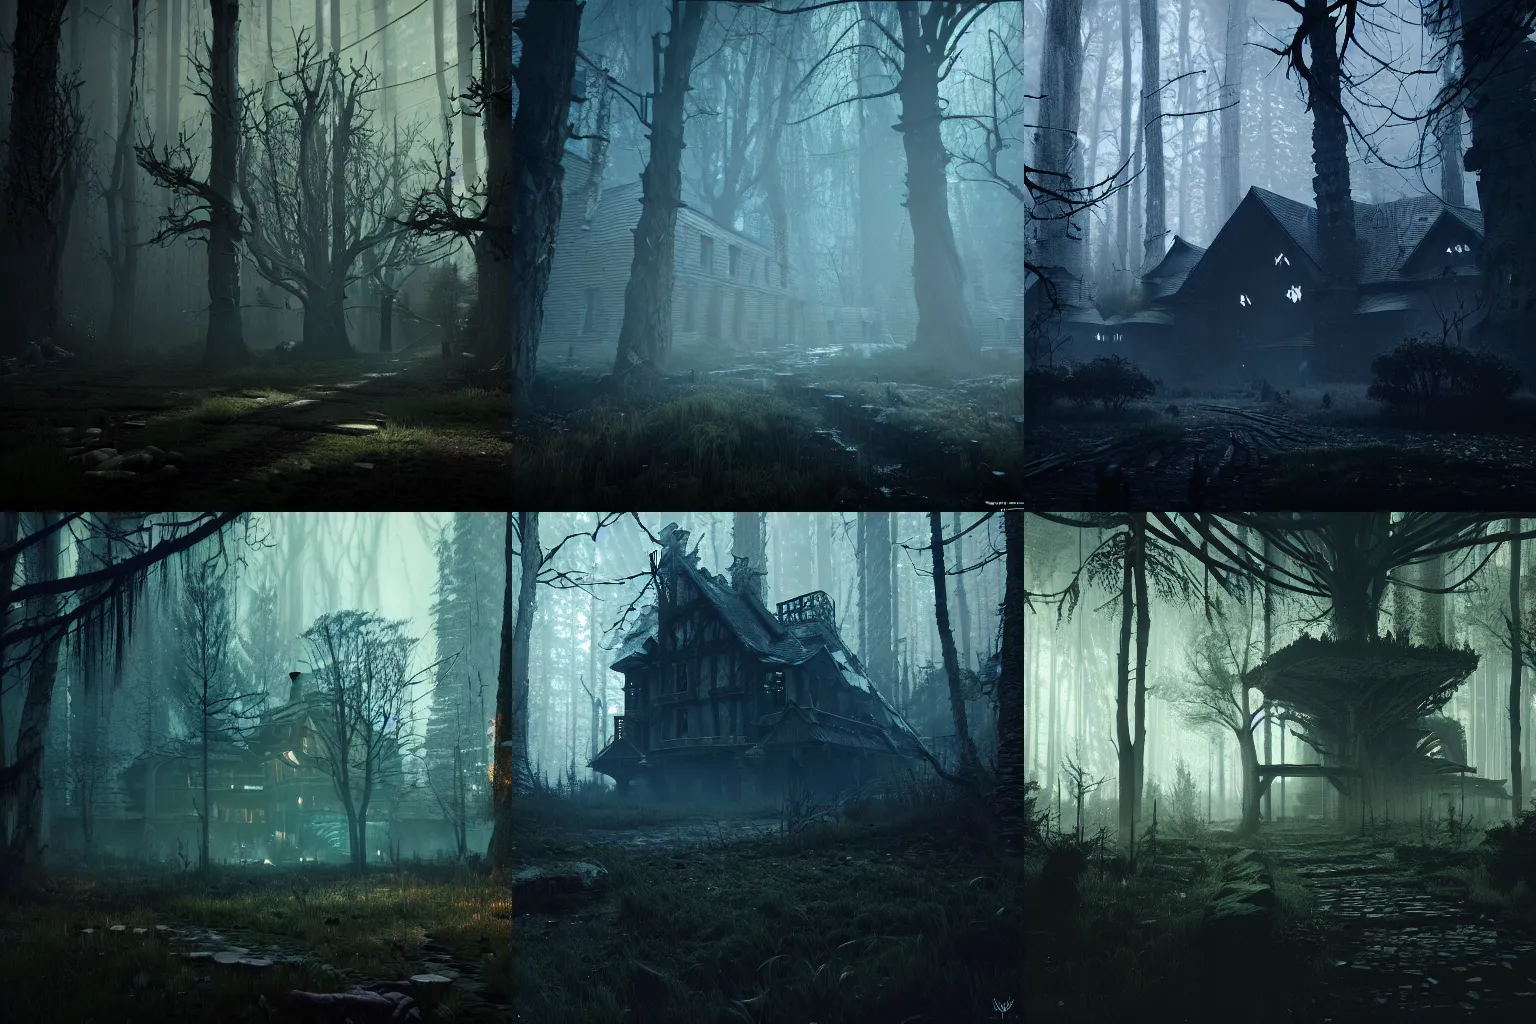 Prompt: a building in a creepy dark forest, witcher, haunted, eerie, Wadim Kashin, featured in artstation, octane render, cinematic, elegant, intricate, 8k